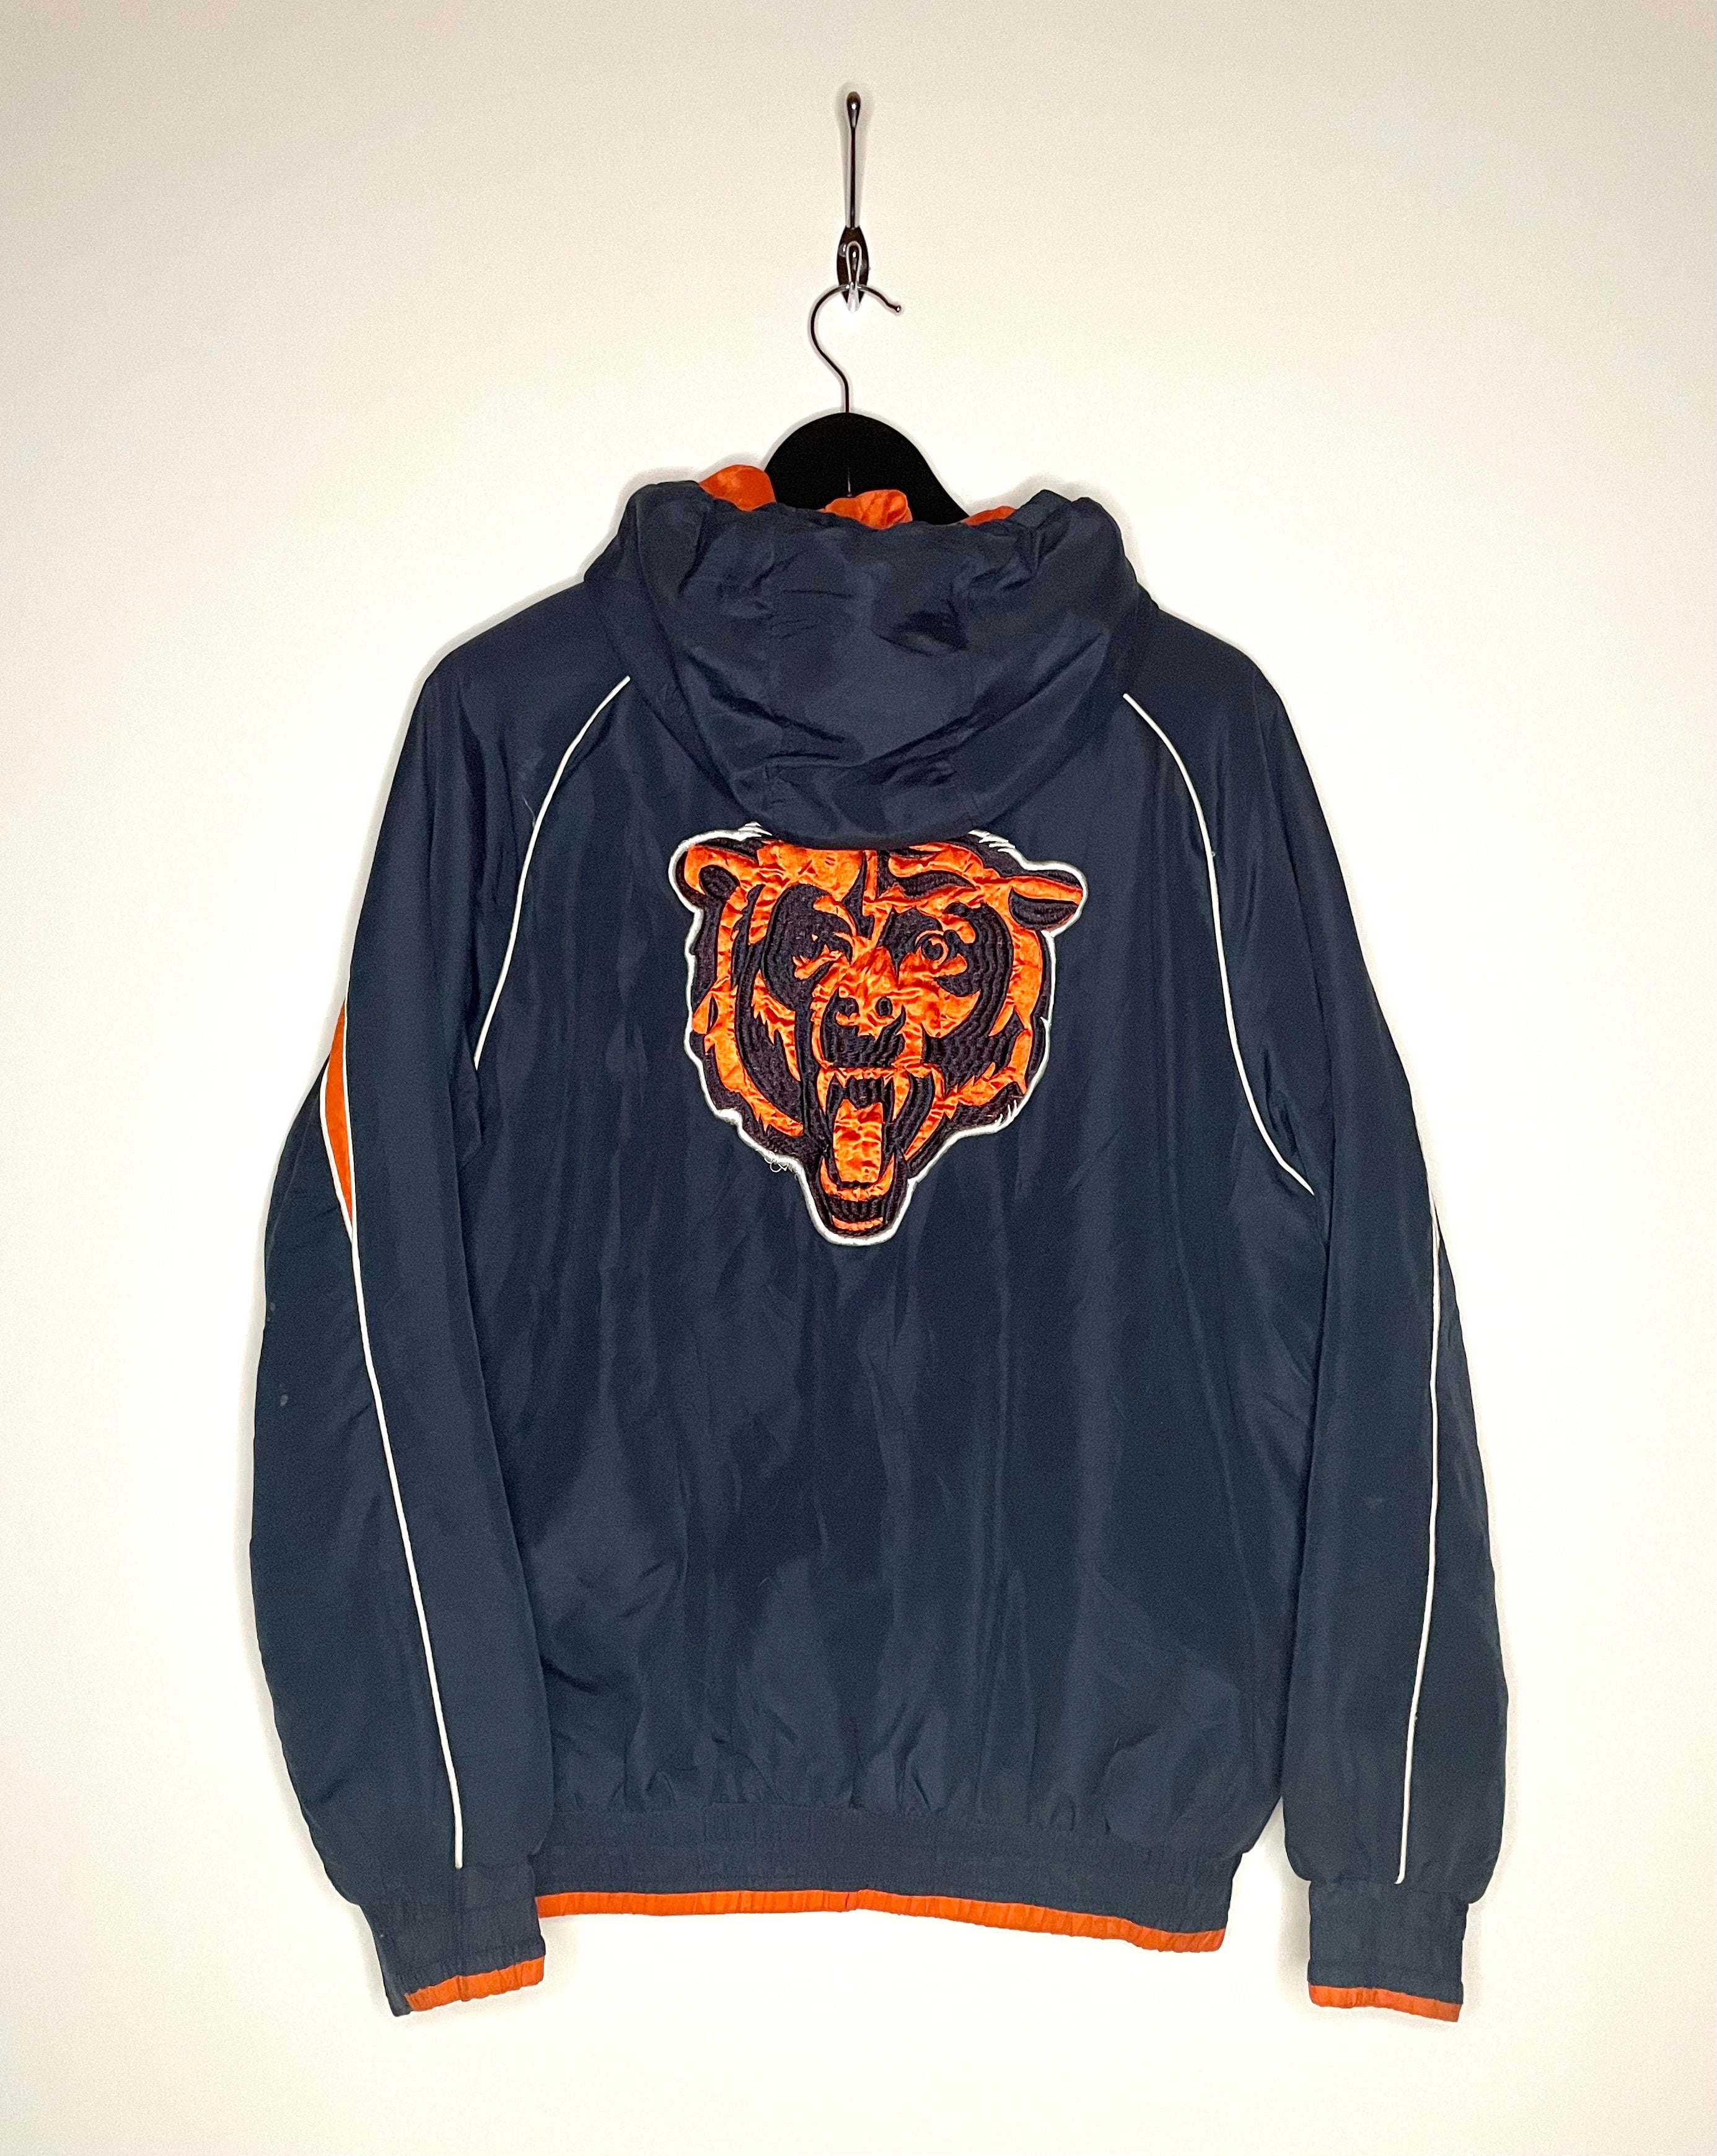 NFL Vintage Winterjacke Chicago Bears Blau/Orange Größe M